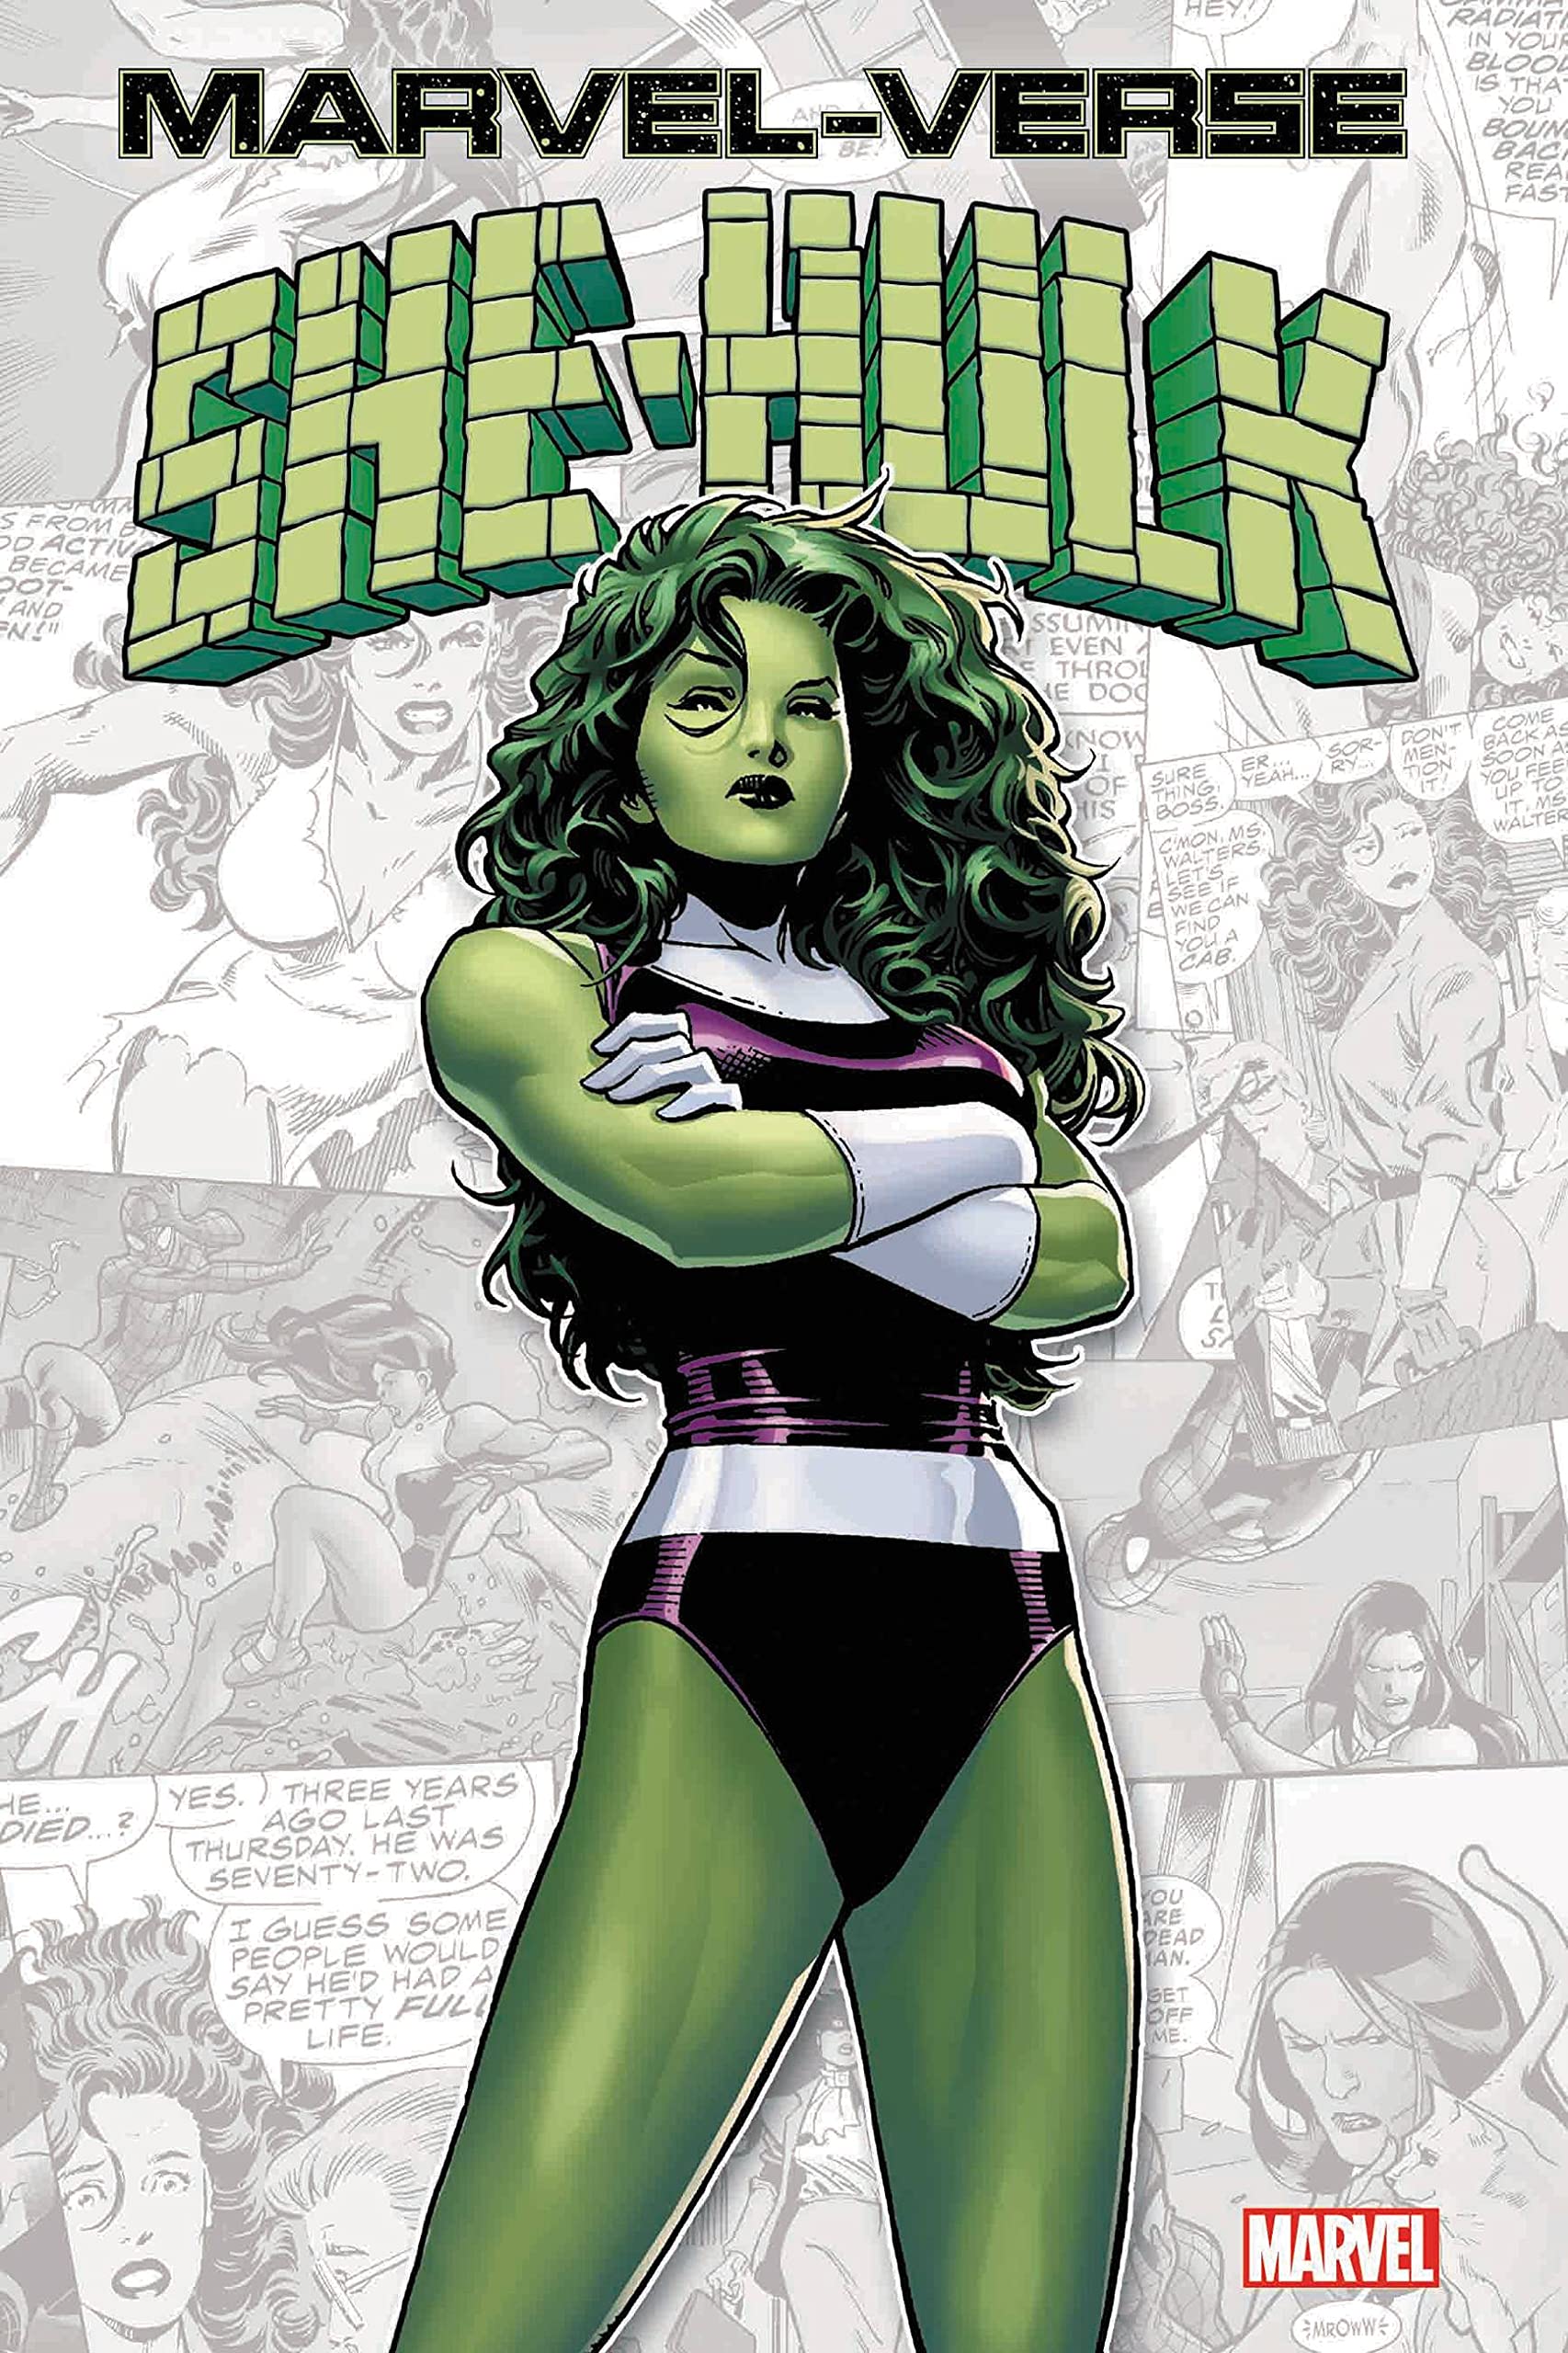 She Hulk book cover